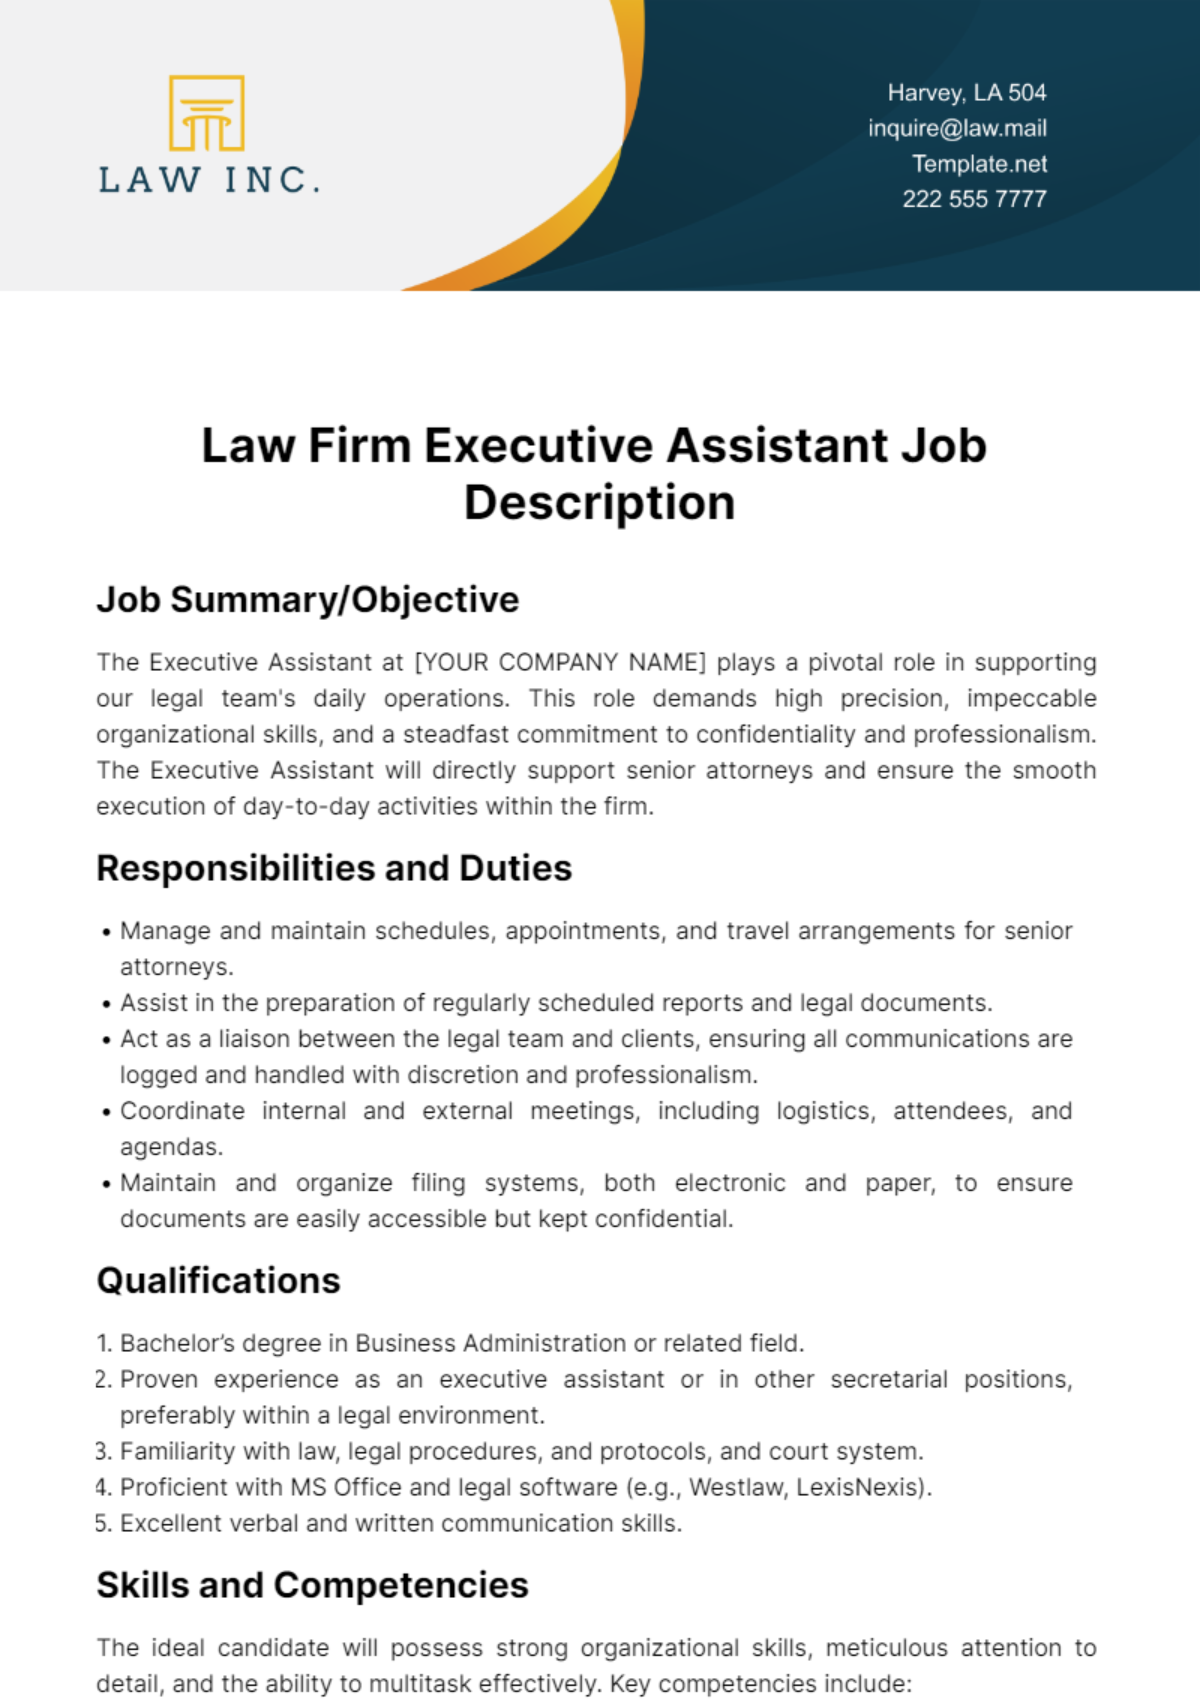 Law Firm Executive Assistant Job Description Template